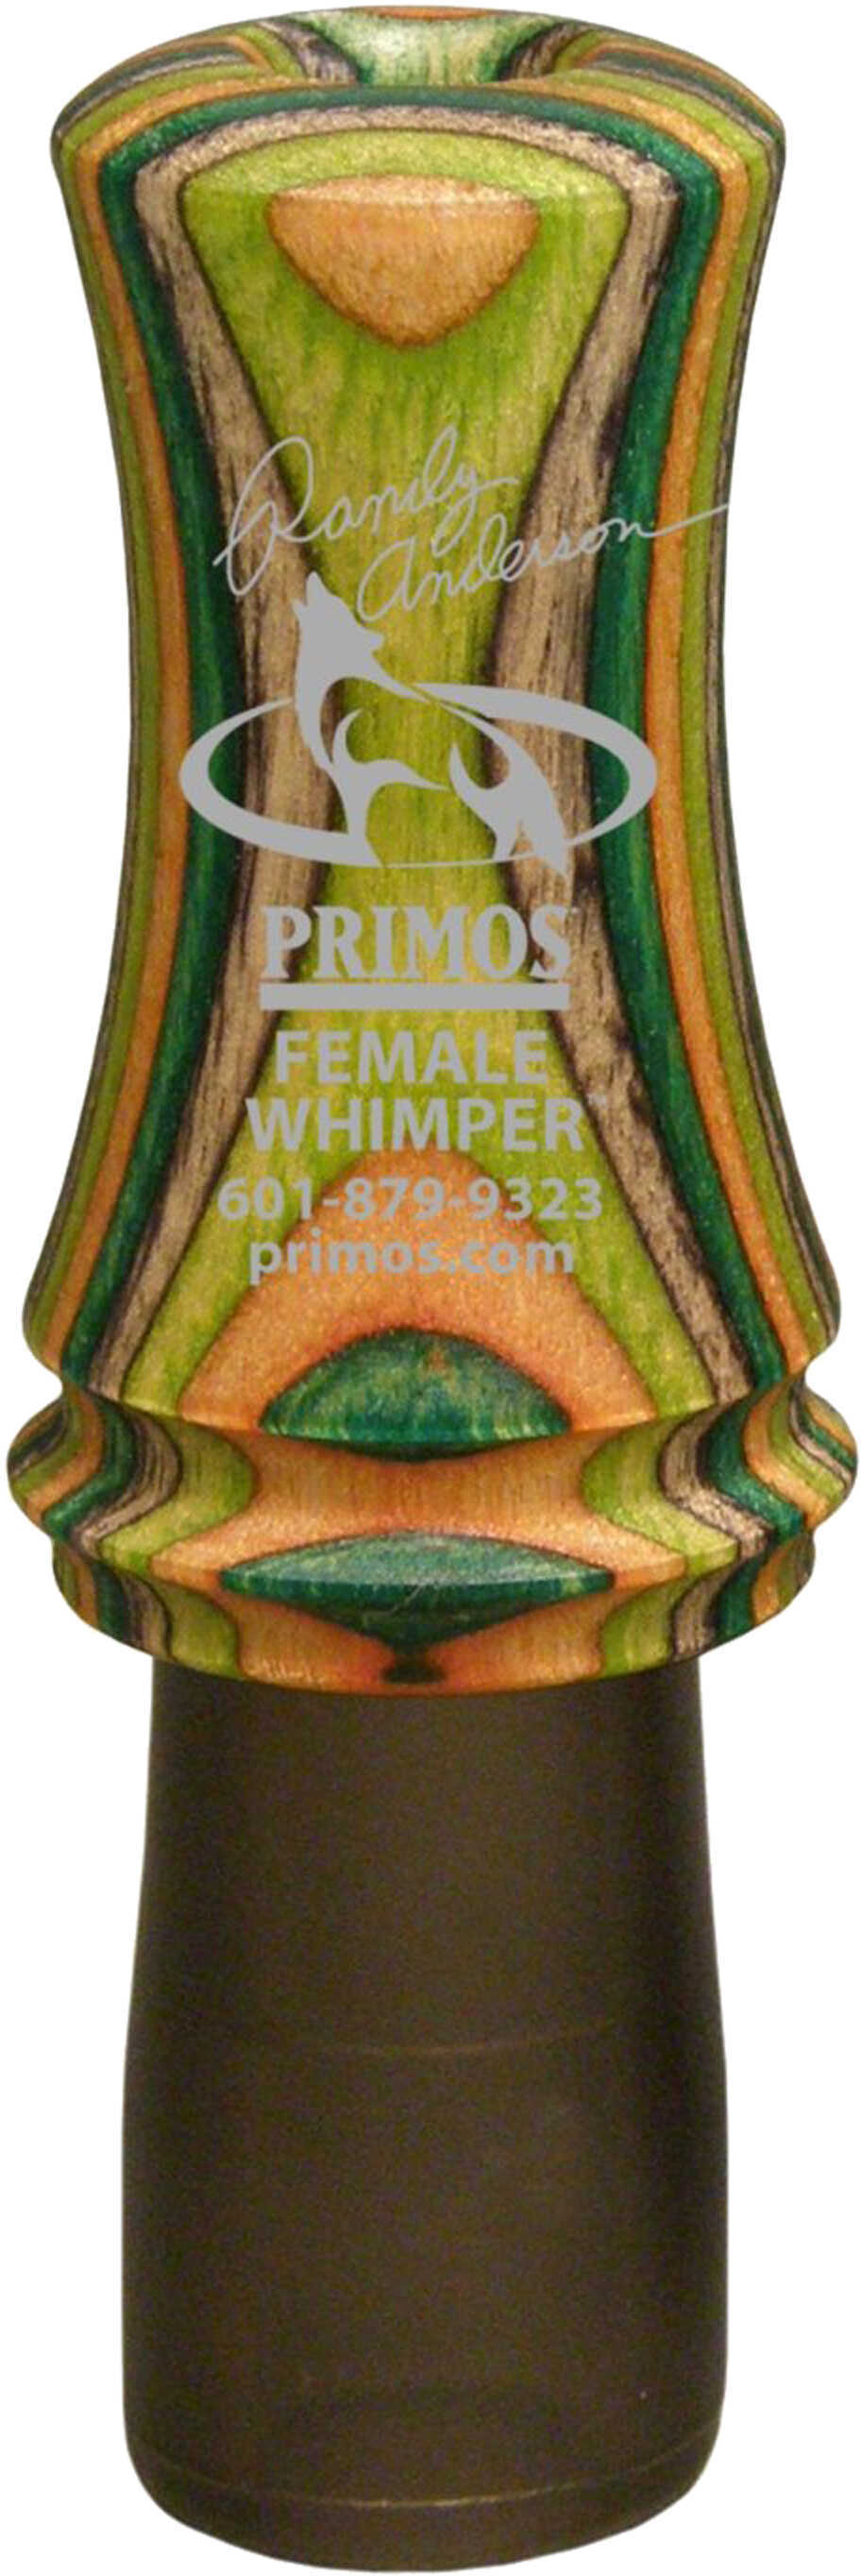 Primos Predator Call Mouth Randy Anderson Female Whimper